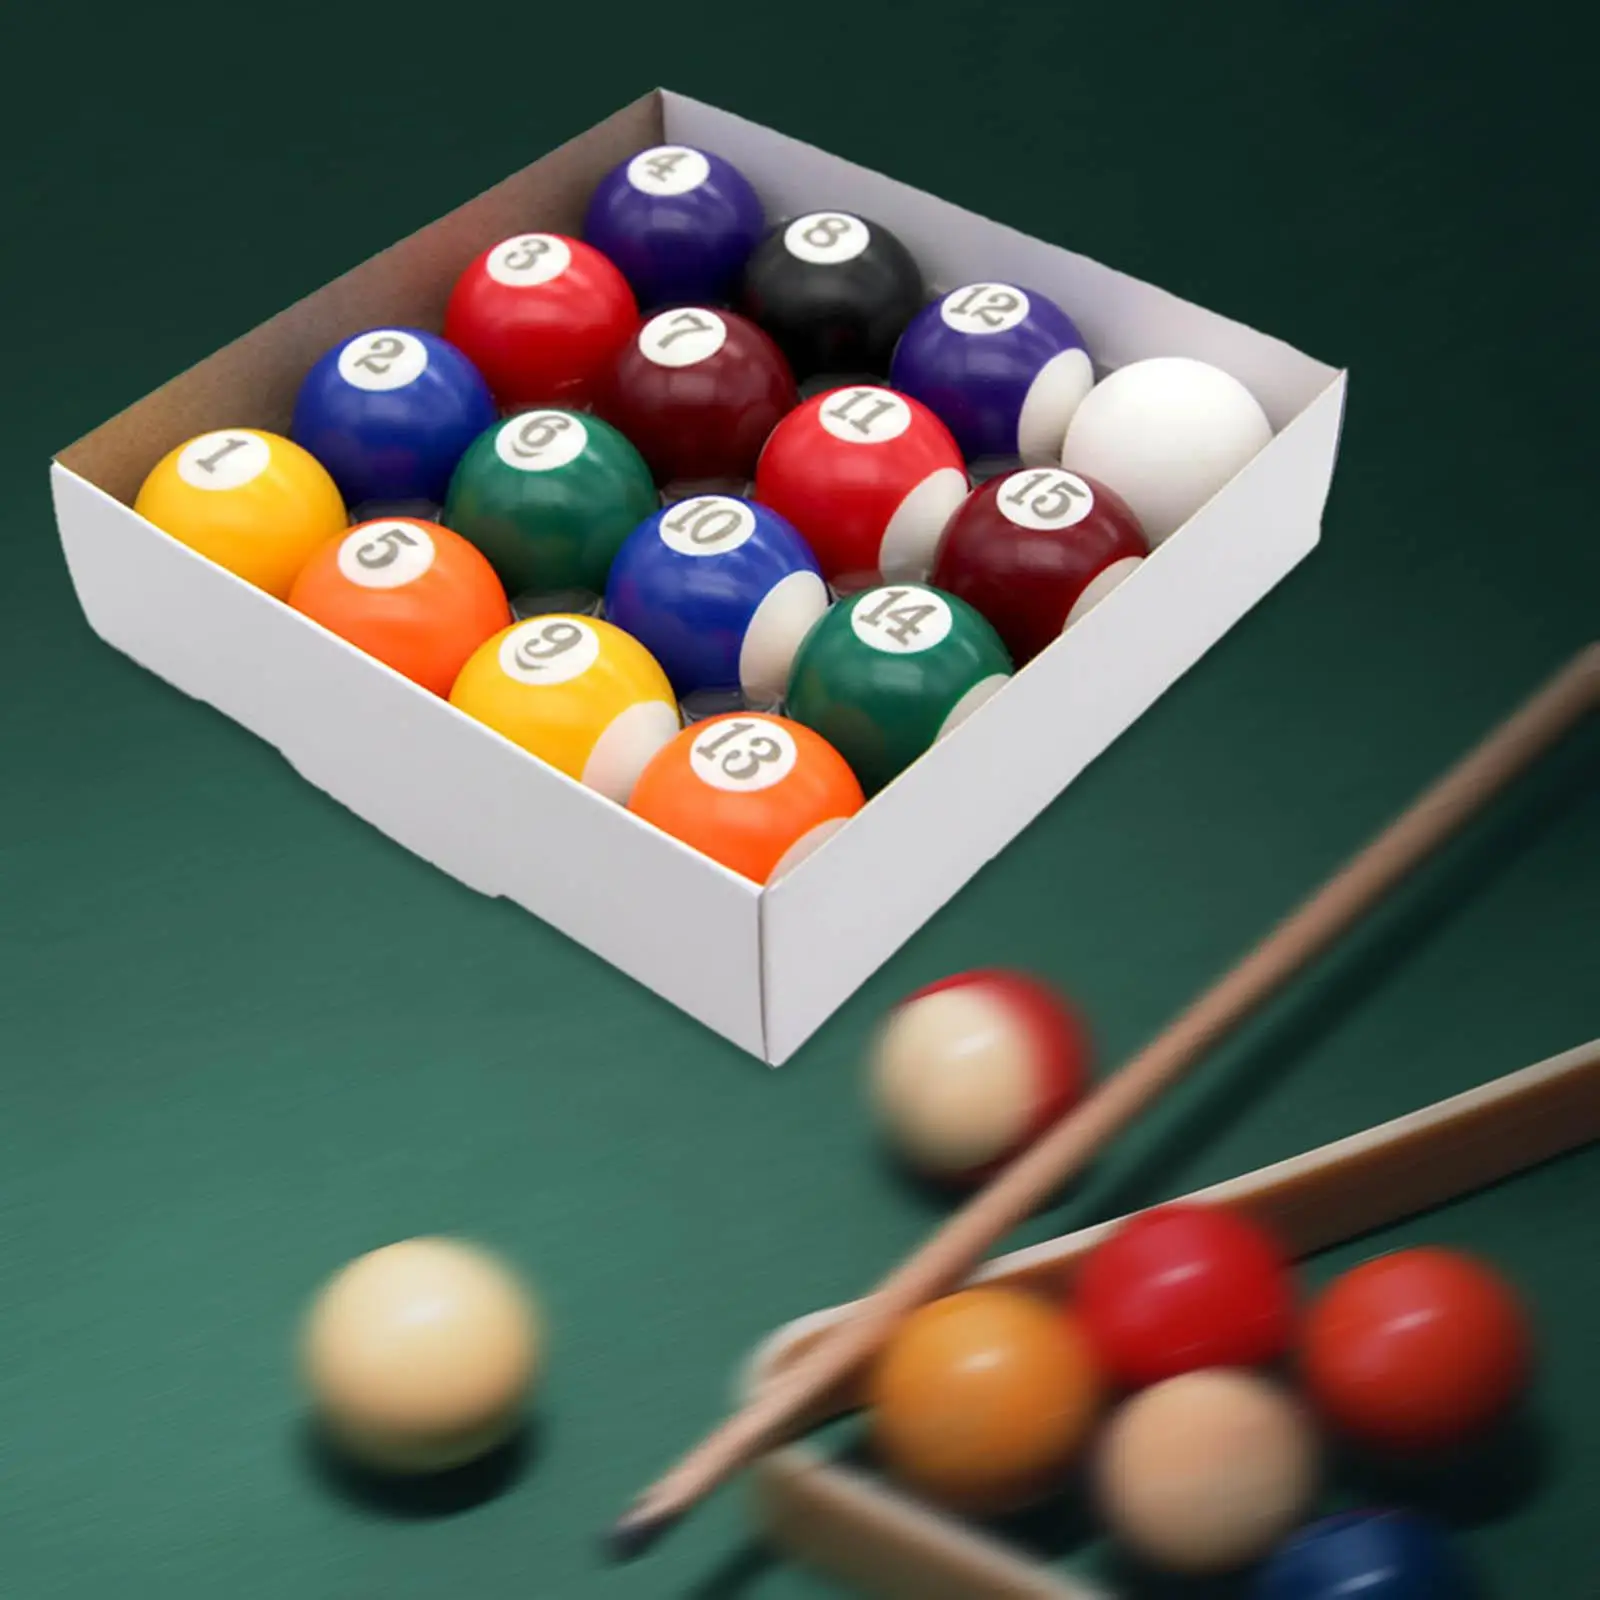 16Pcs Billiard Ball Set 1.26`` Resin Table Accessory Children Billiard Ball Toy Mini Pool Ball for Sports Games Bars Game Rooms